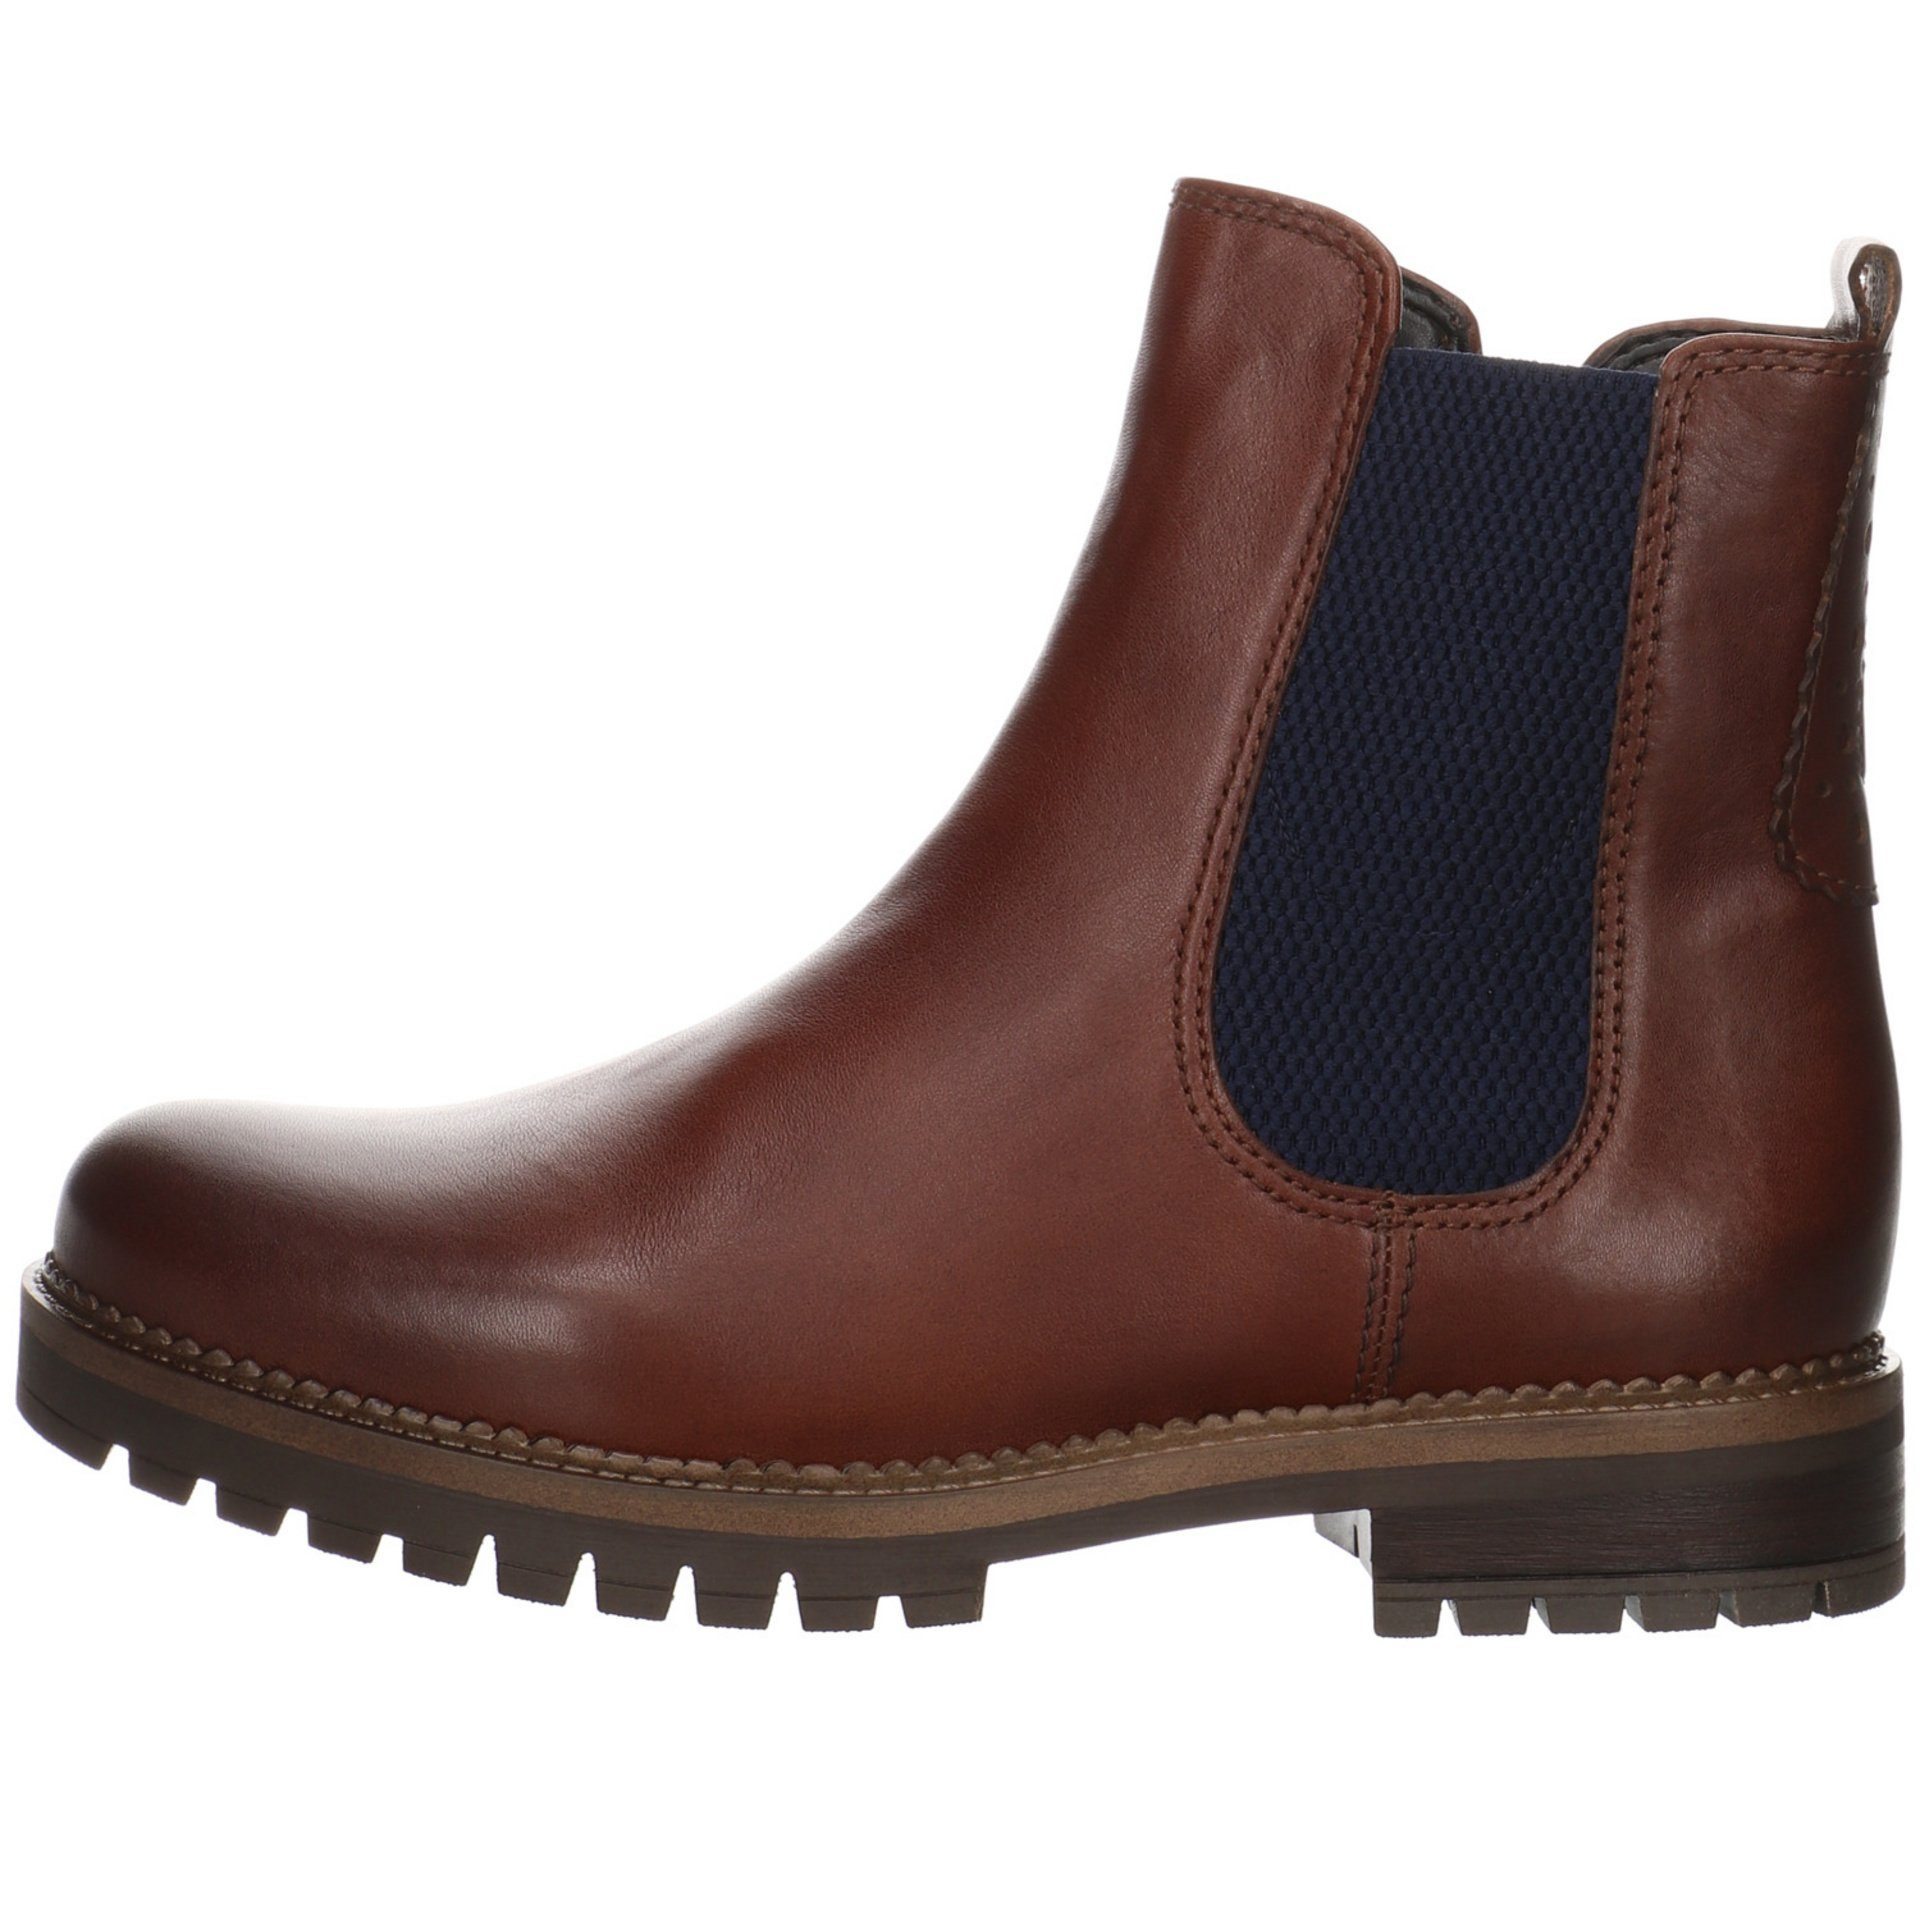 Leder-/Textilkombination (river) Schuhe Stiefel Chelsea Damen sattel Gabor Stiefel Boots